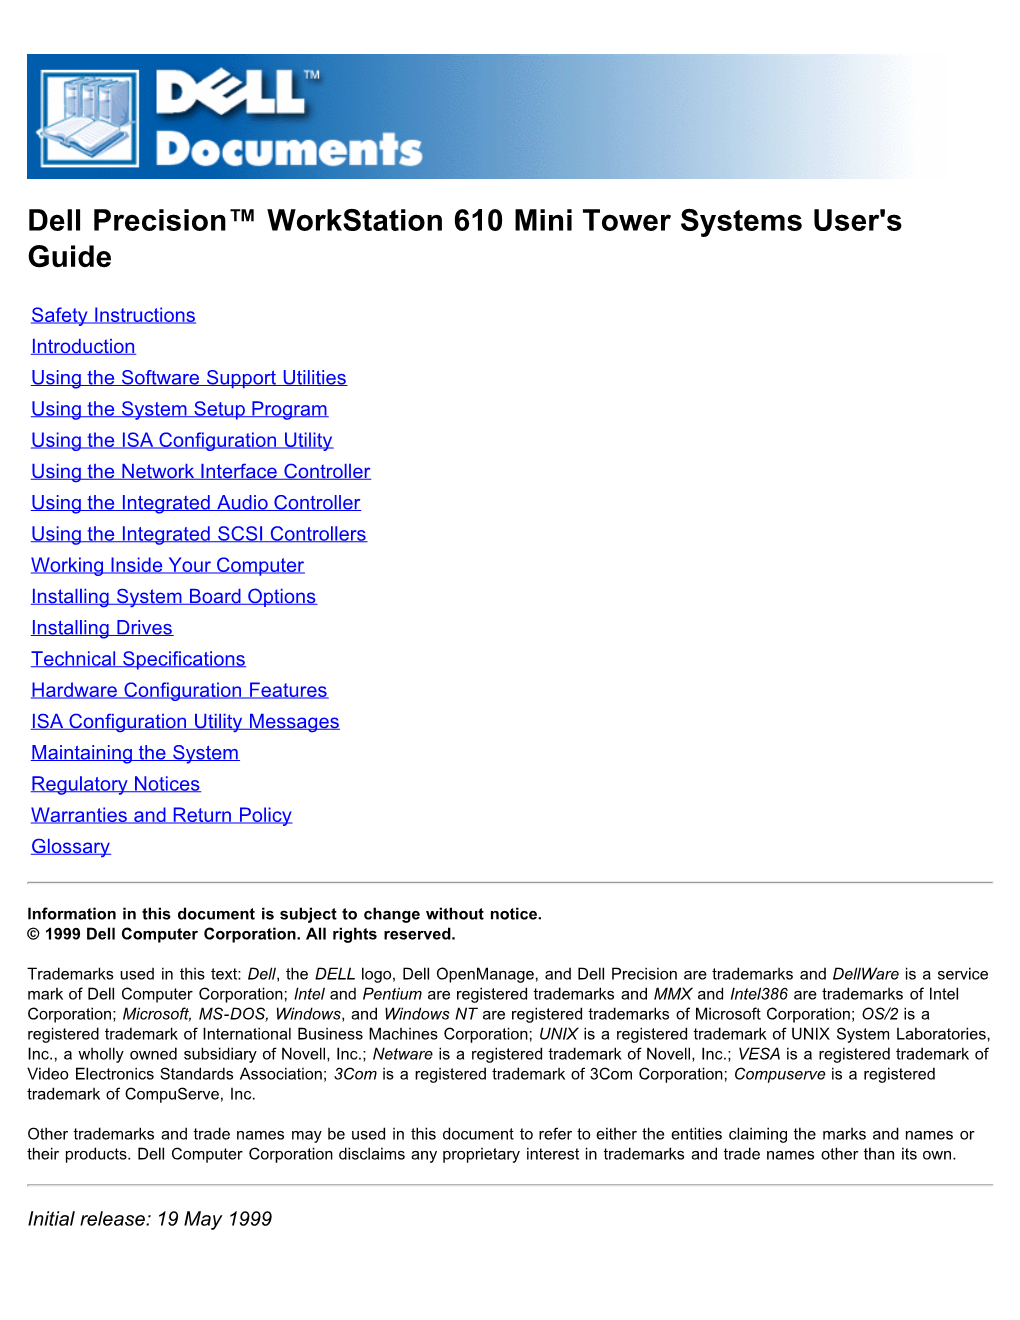 Dell Precision Workstation 610 Mini Tower Systems User's Guide